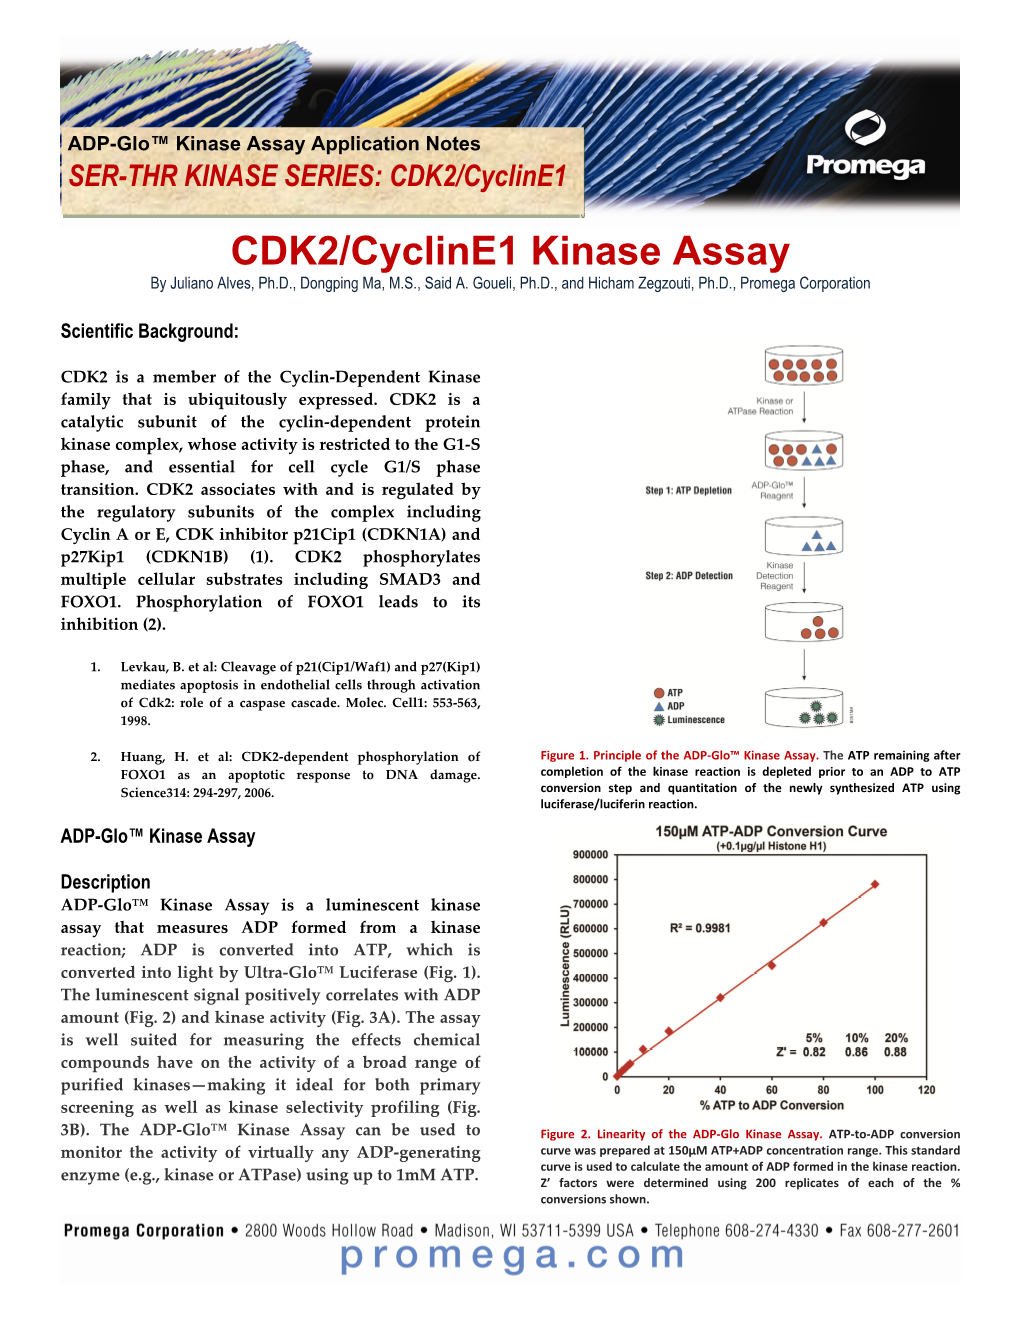 CDK2/Cycline1 Kinase Assay by Juliano Alves, Ph.D., Dongping Ma, M.S., Said A